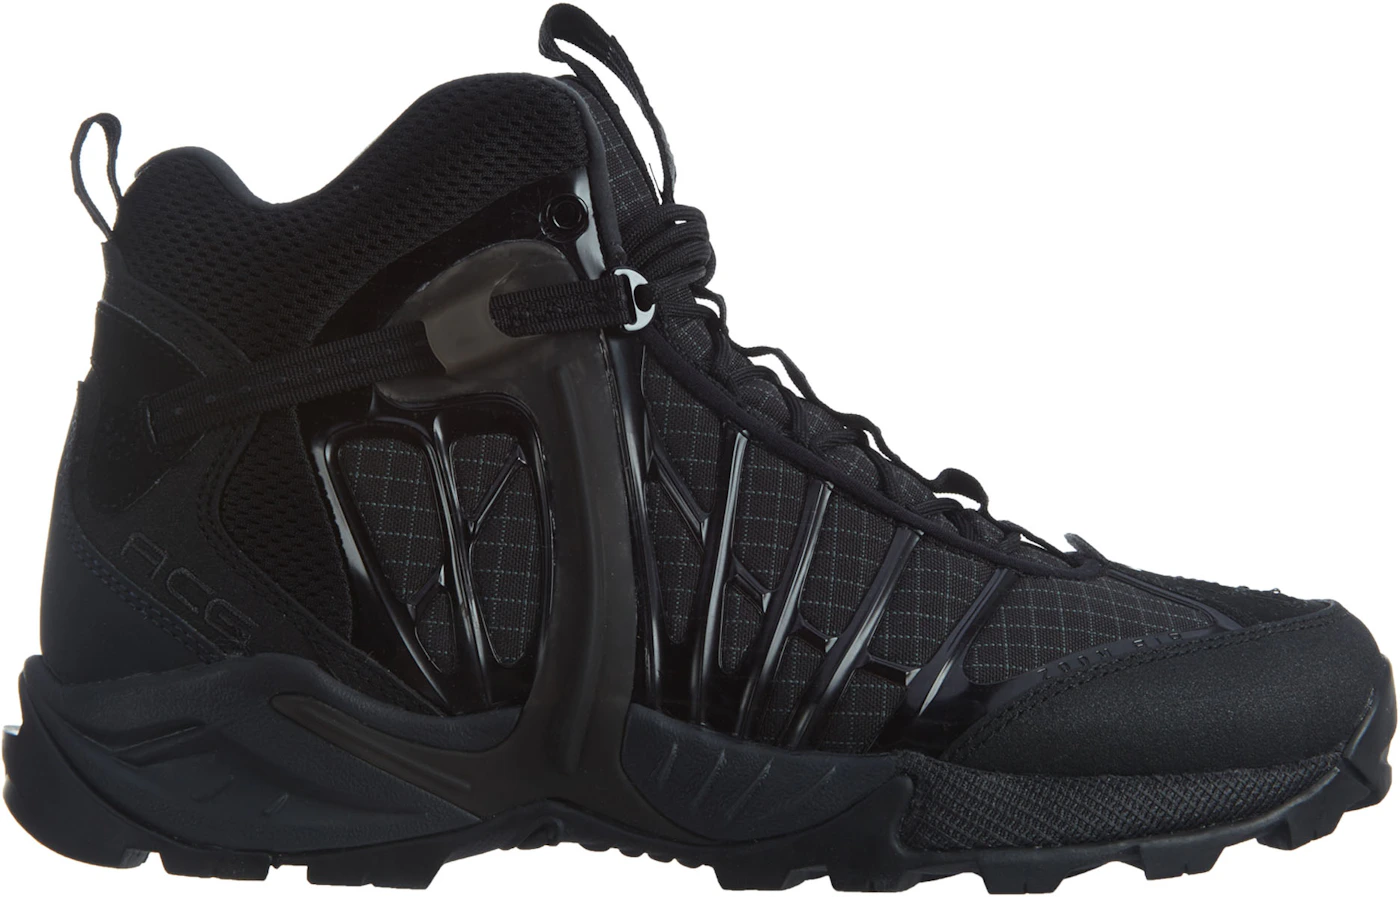 Nike Zoom Tallac Og Black/Black-Black - 844018-003 - US